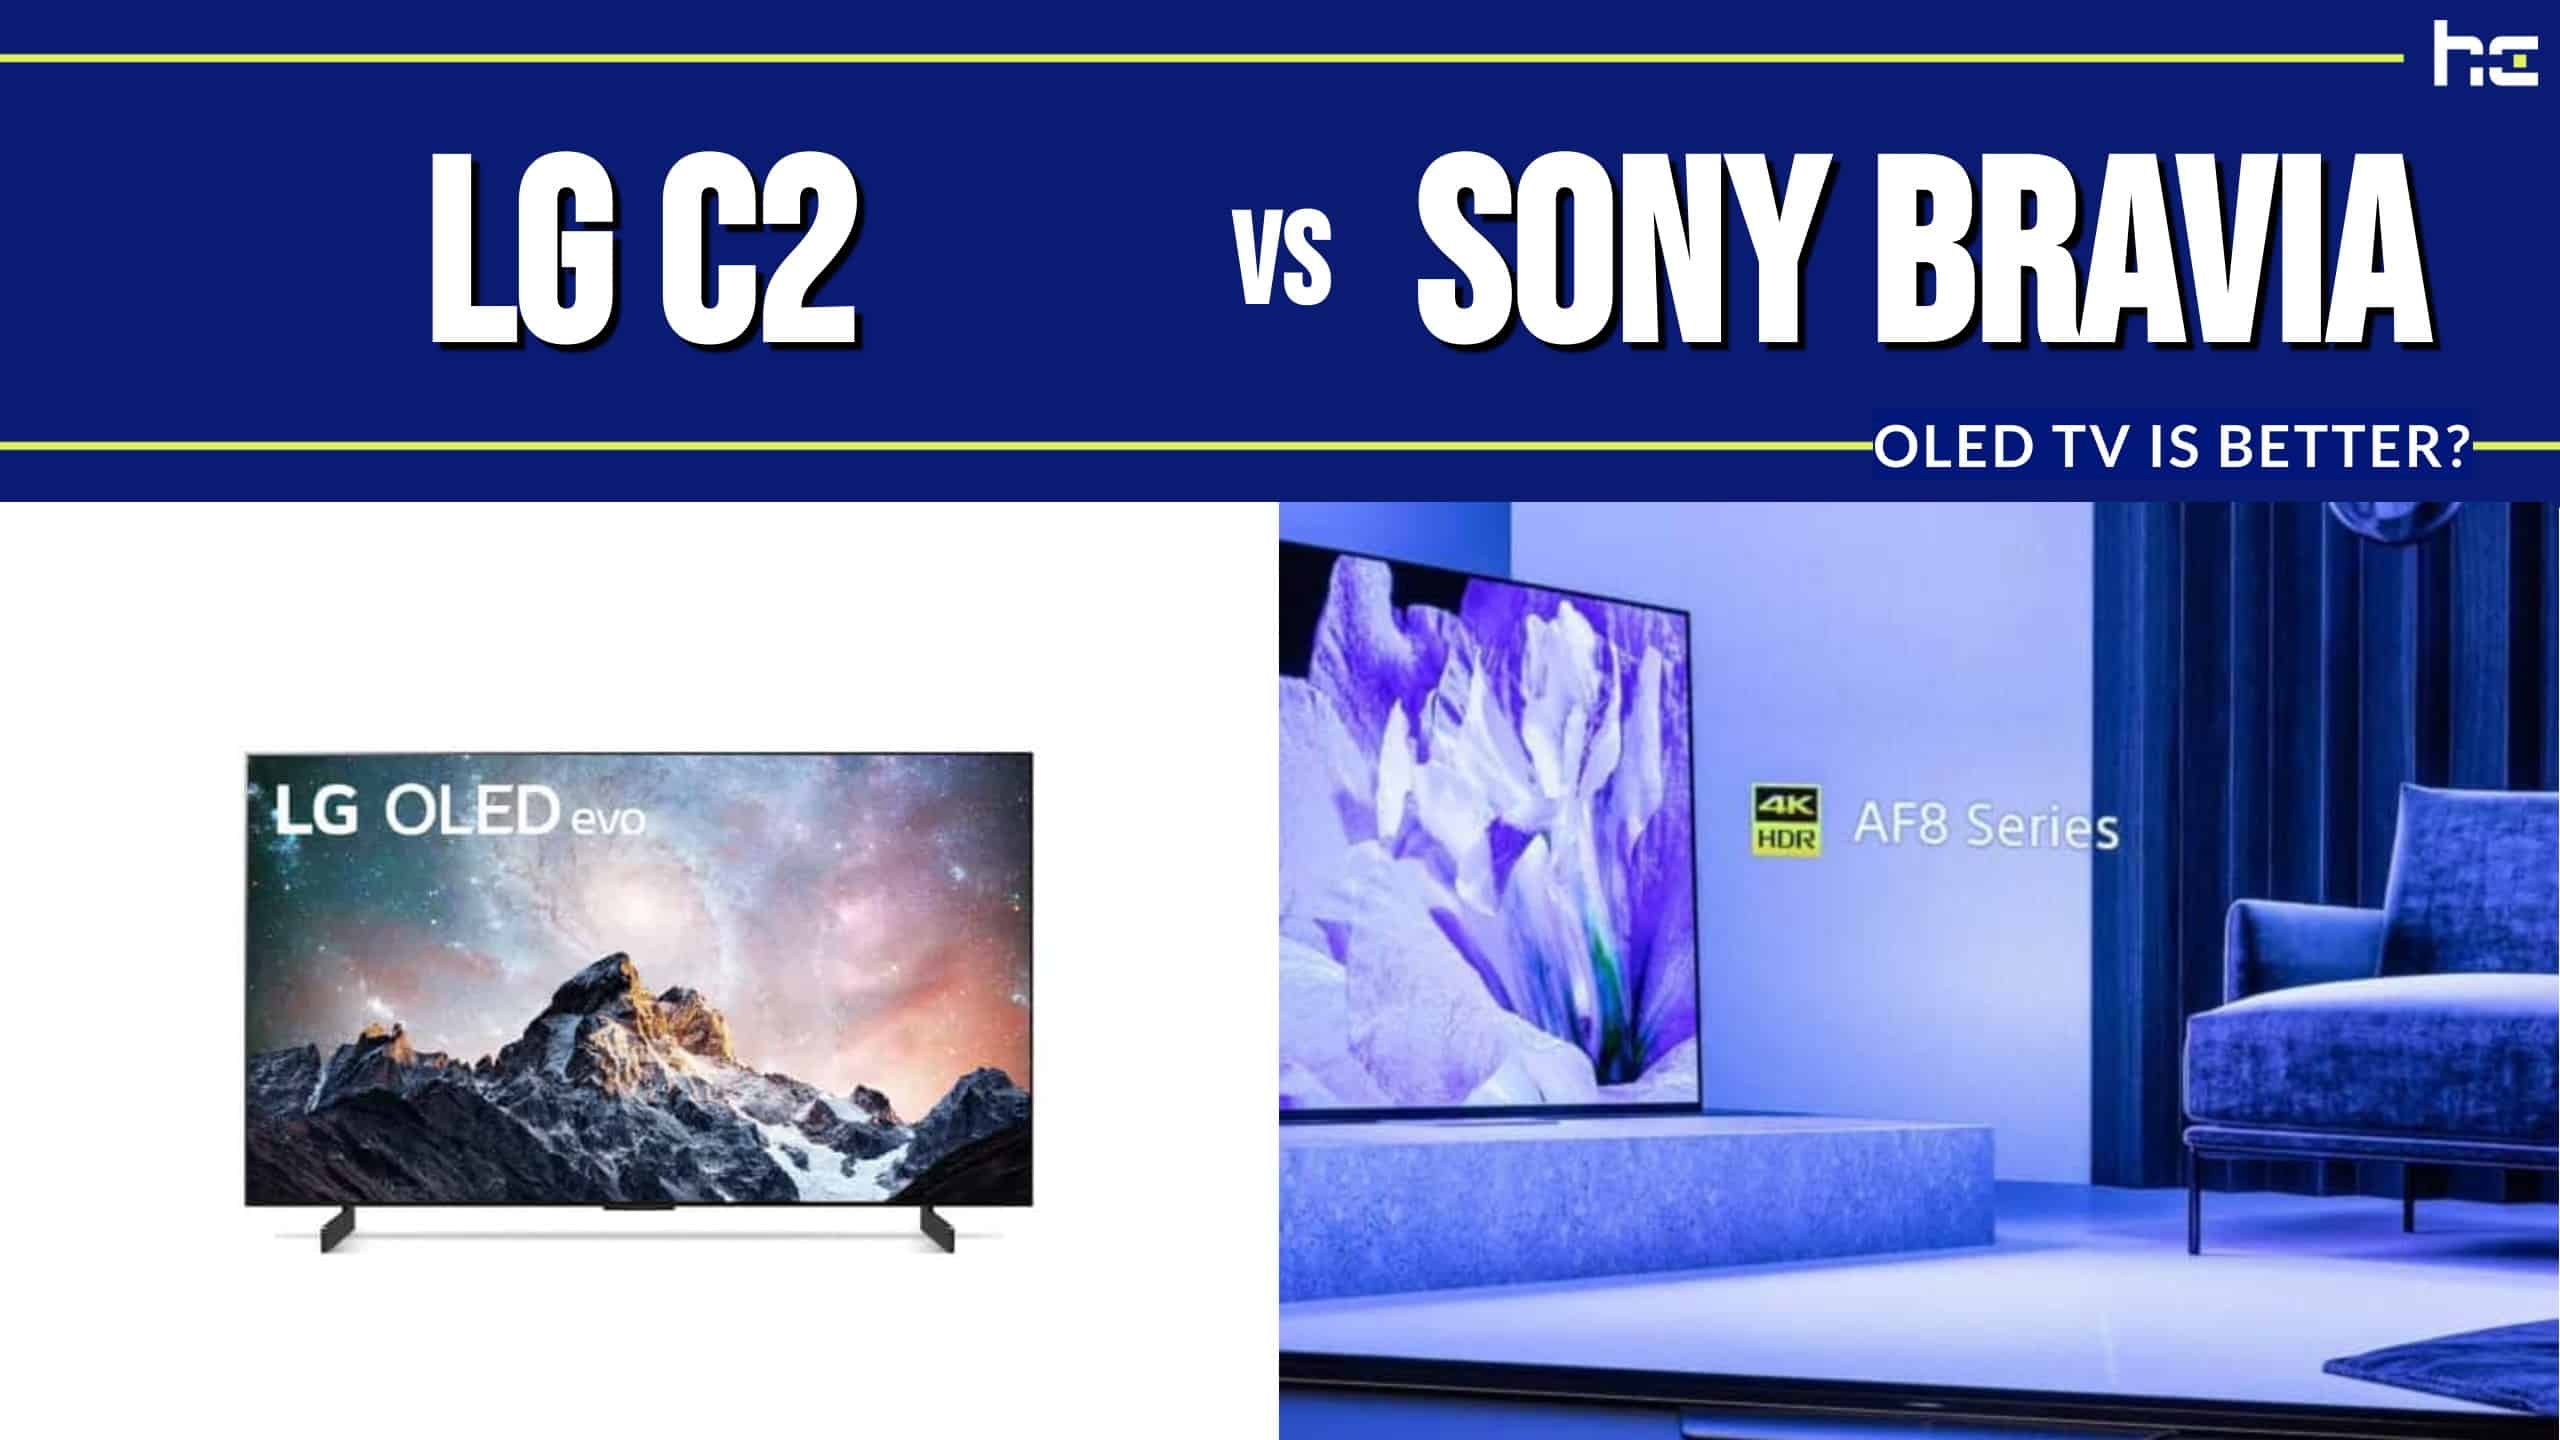 LG C2 vs Sony Bravia